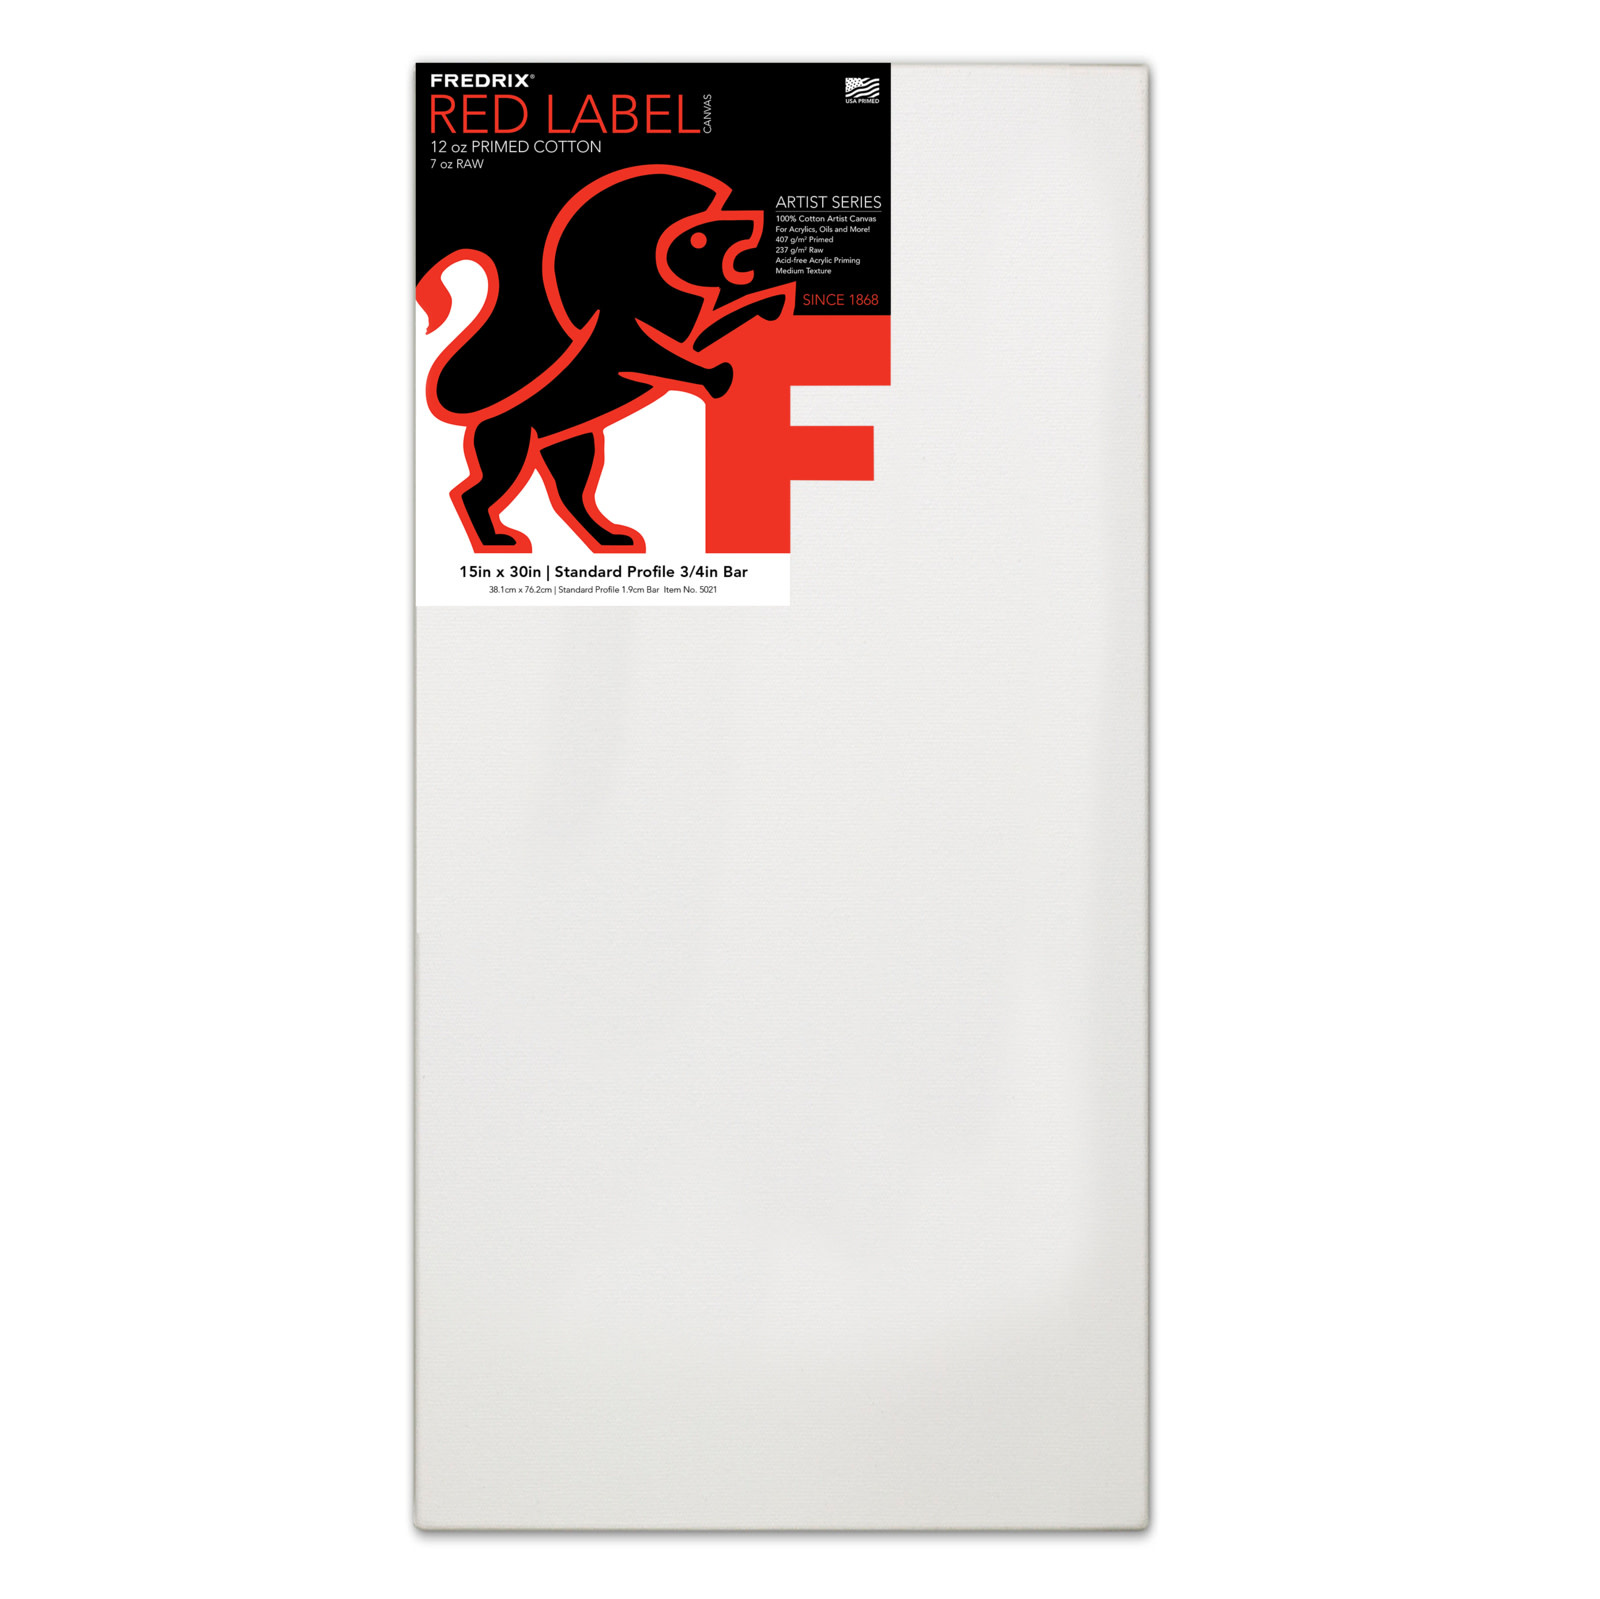 Fredrix Artist Series Red Label 12 oz. Primed Cotton Stretched Canvas, 3/4" Standard Profile, 15" x 30"